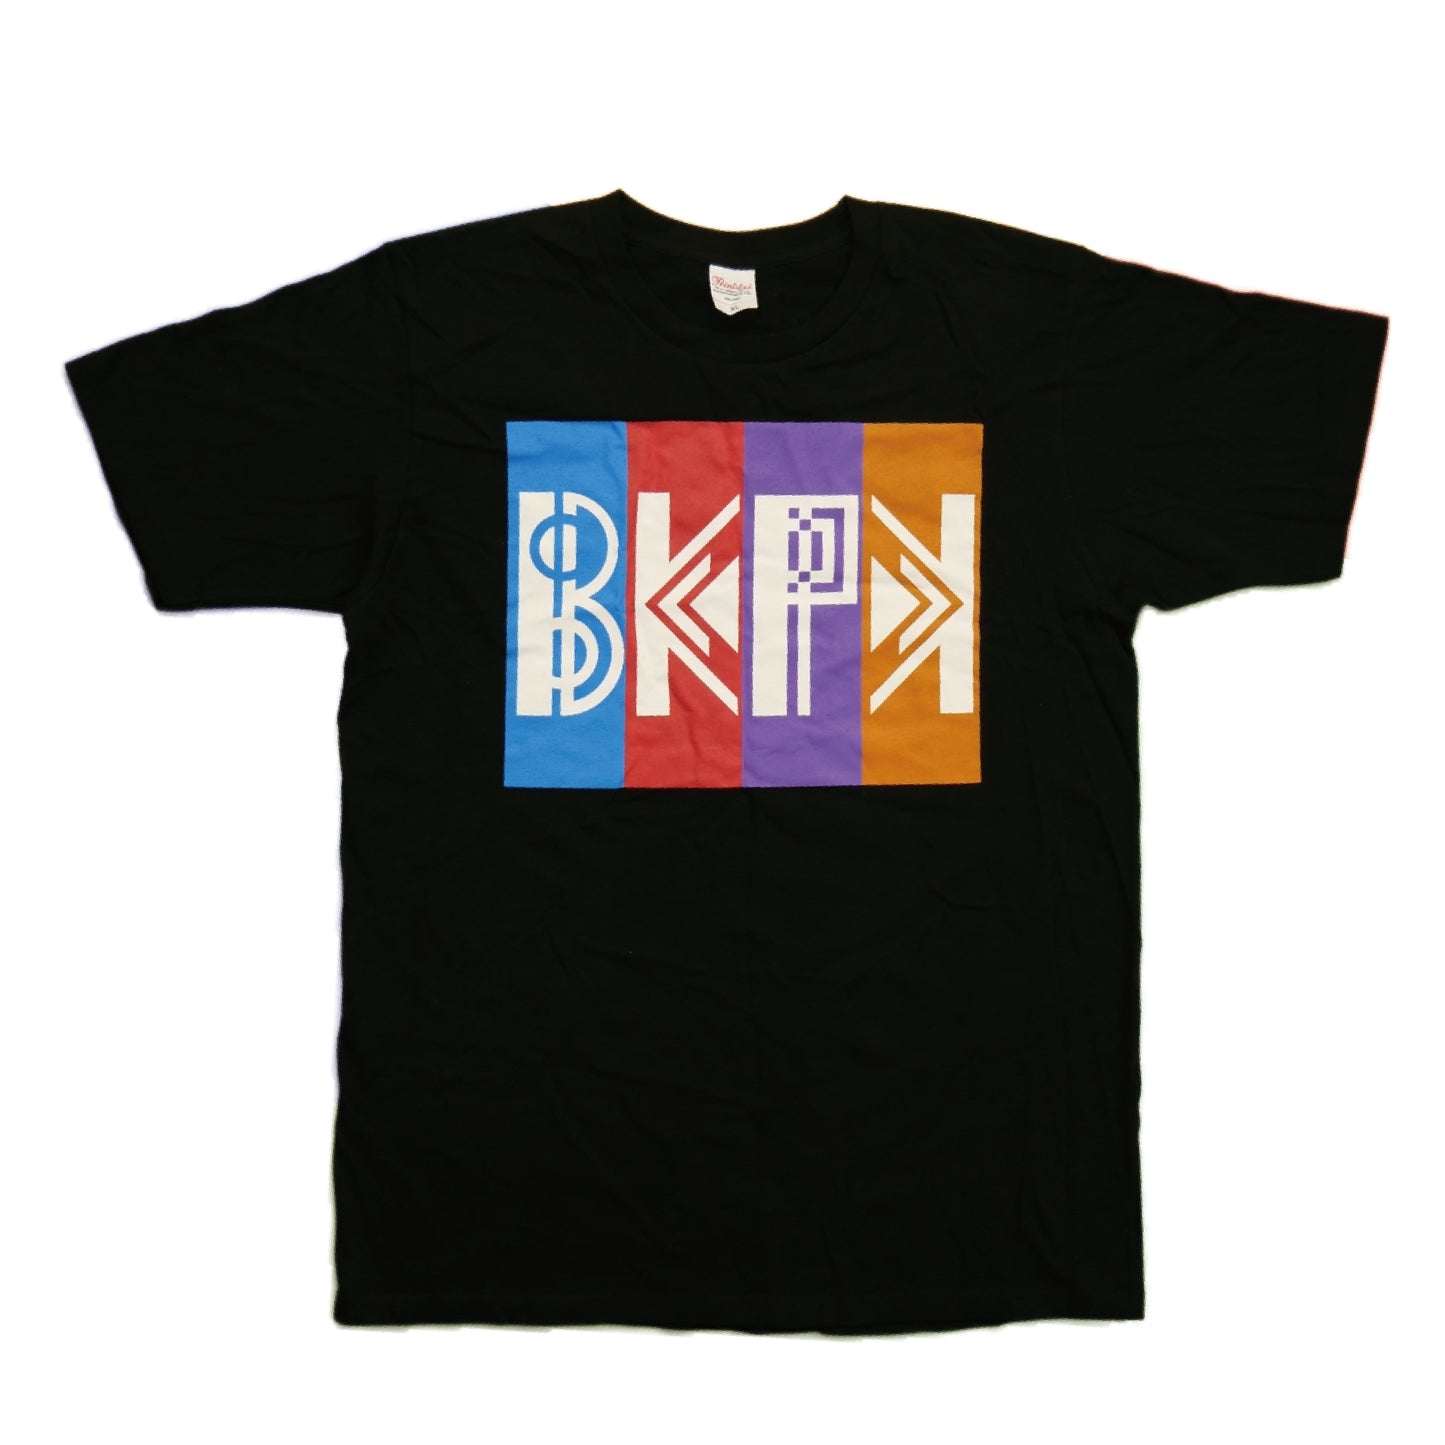 【BKPK Tour】 Tシャツ